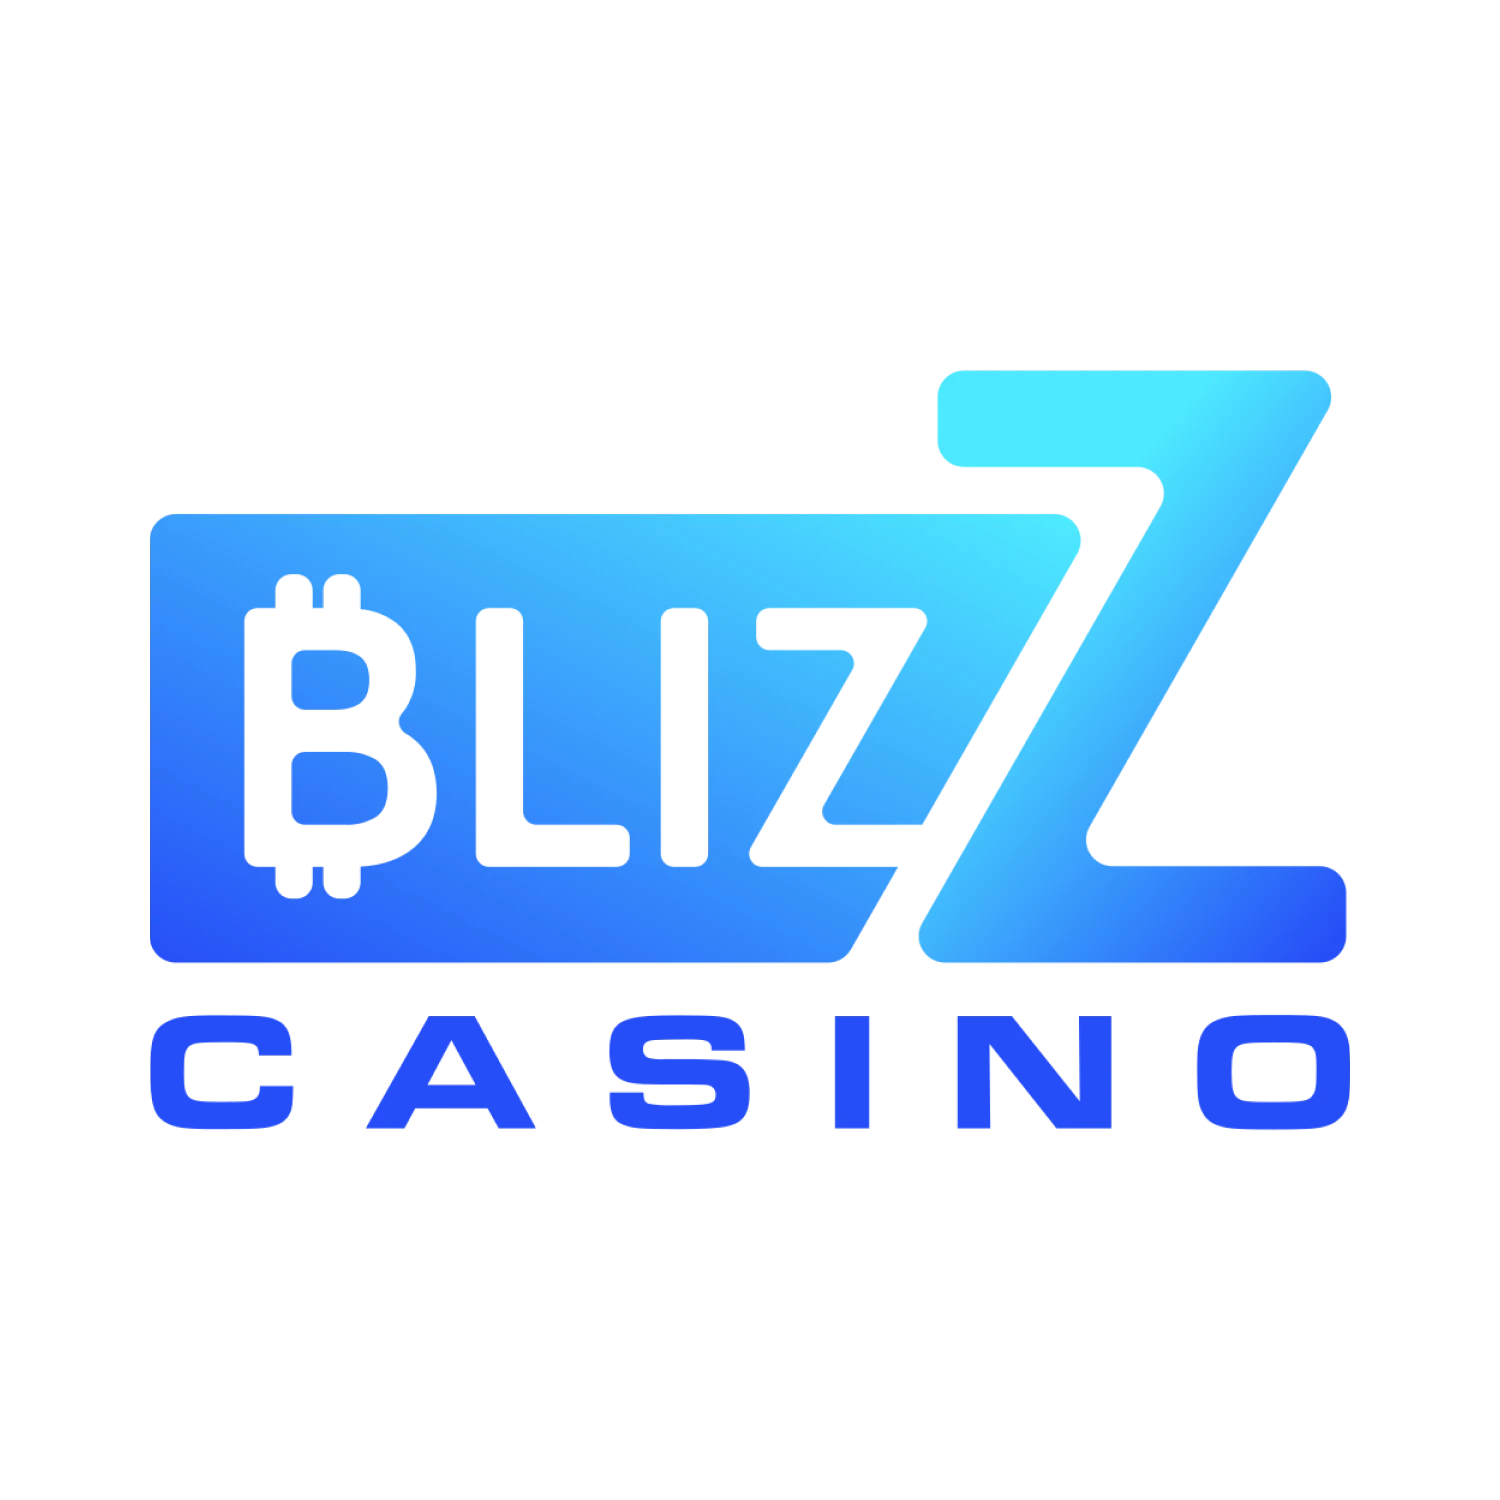 Blizz.io is one of the popular crypto casinos.